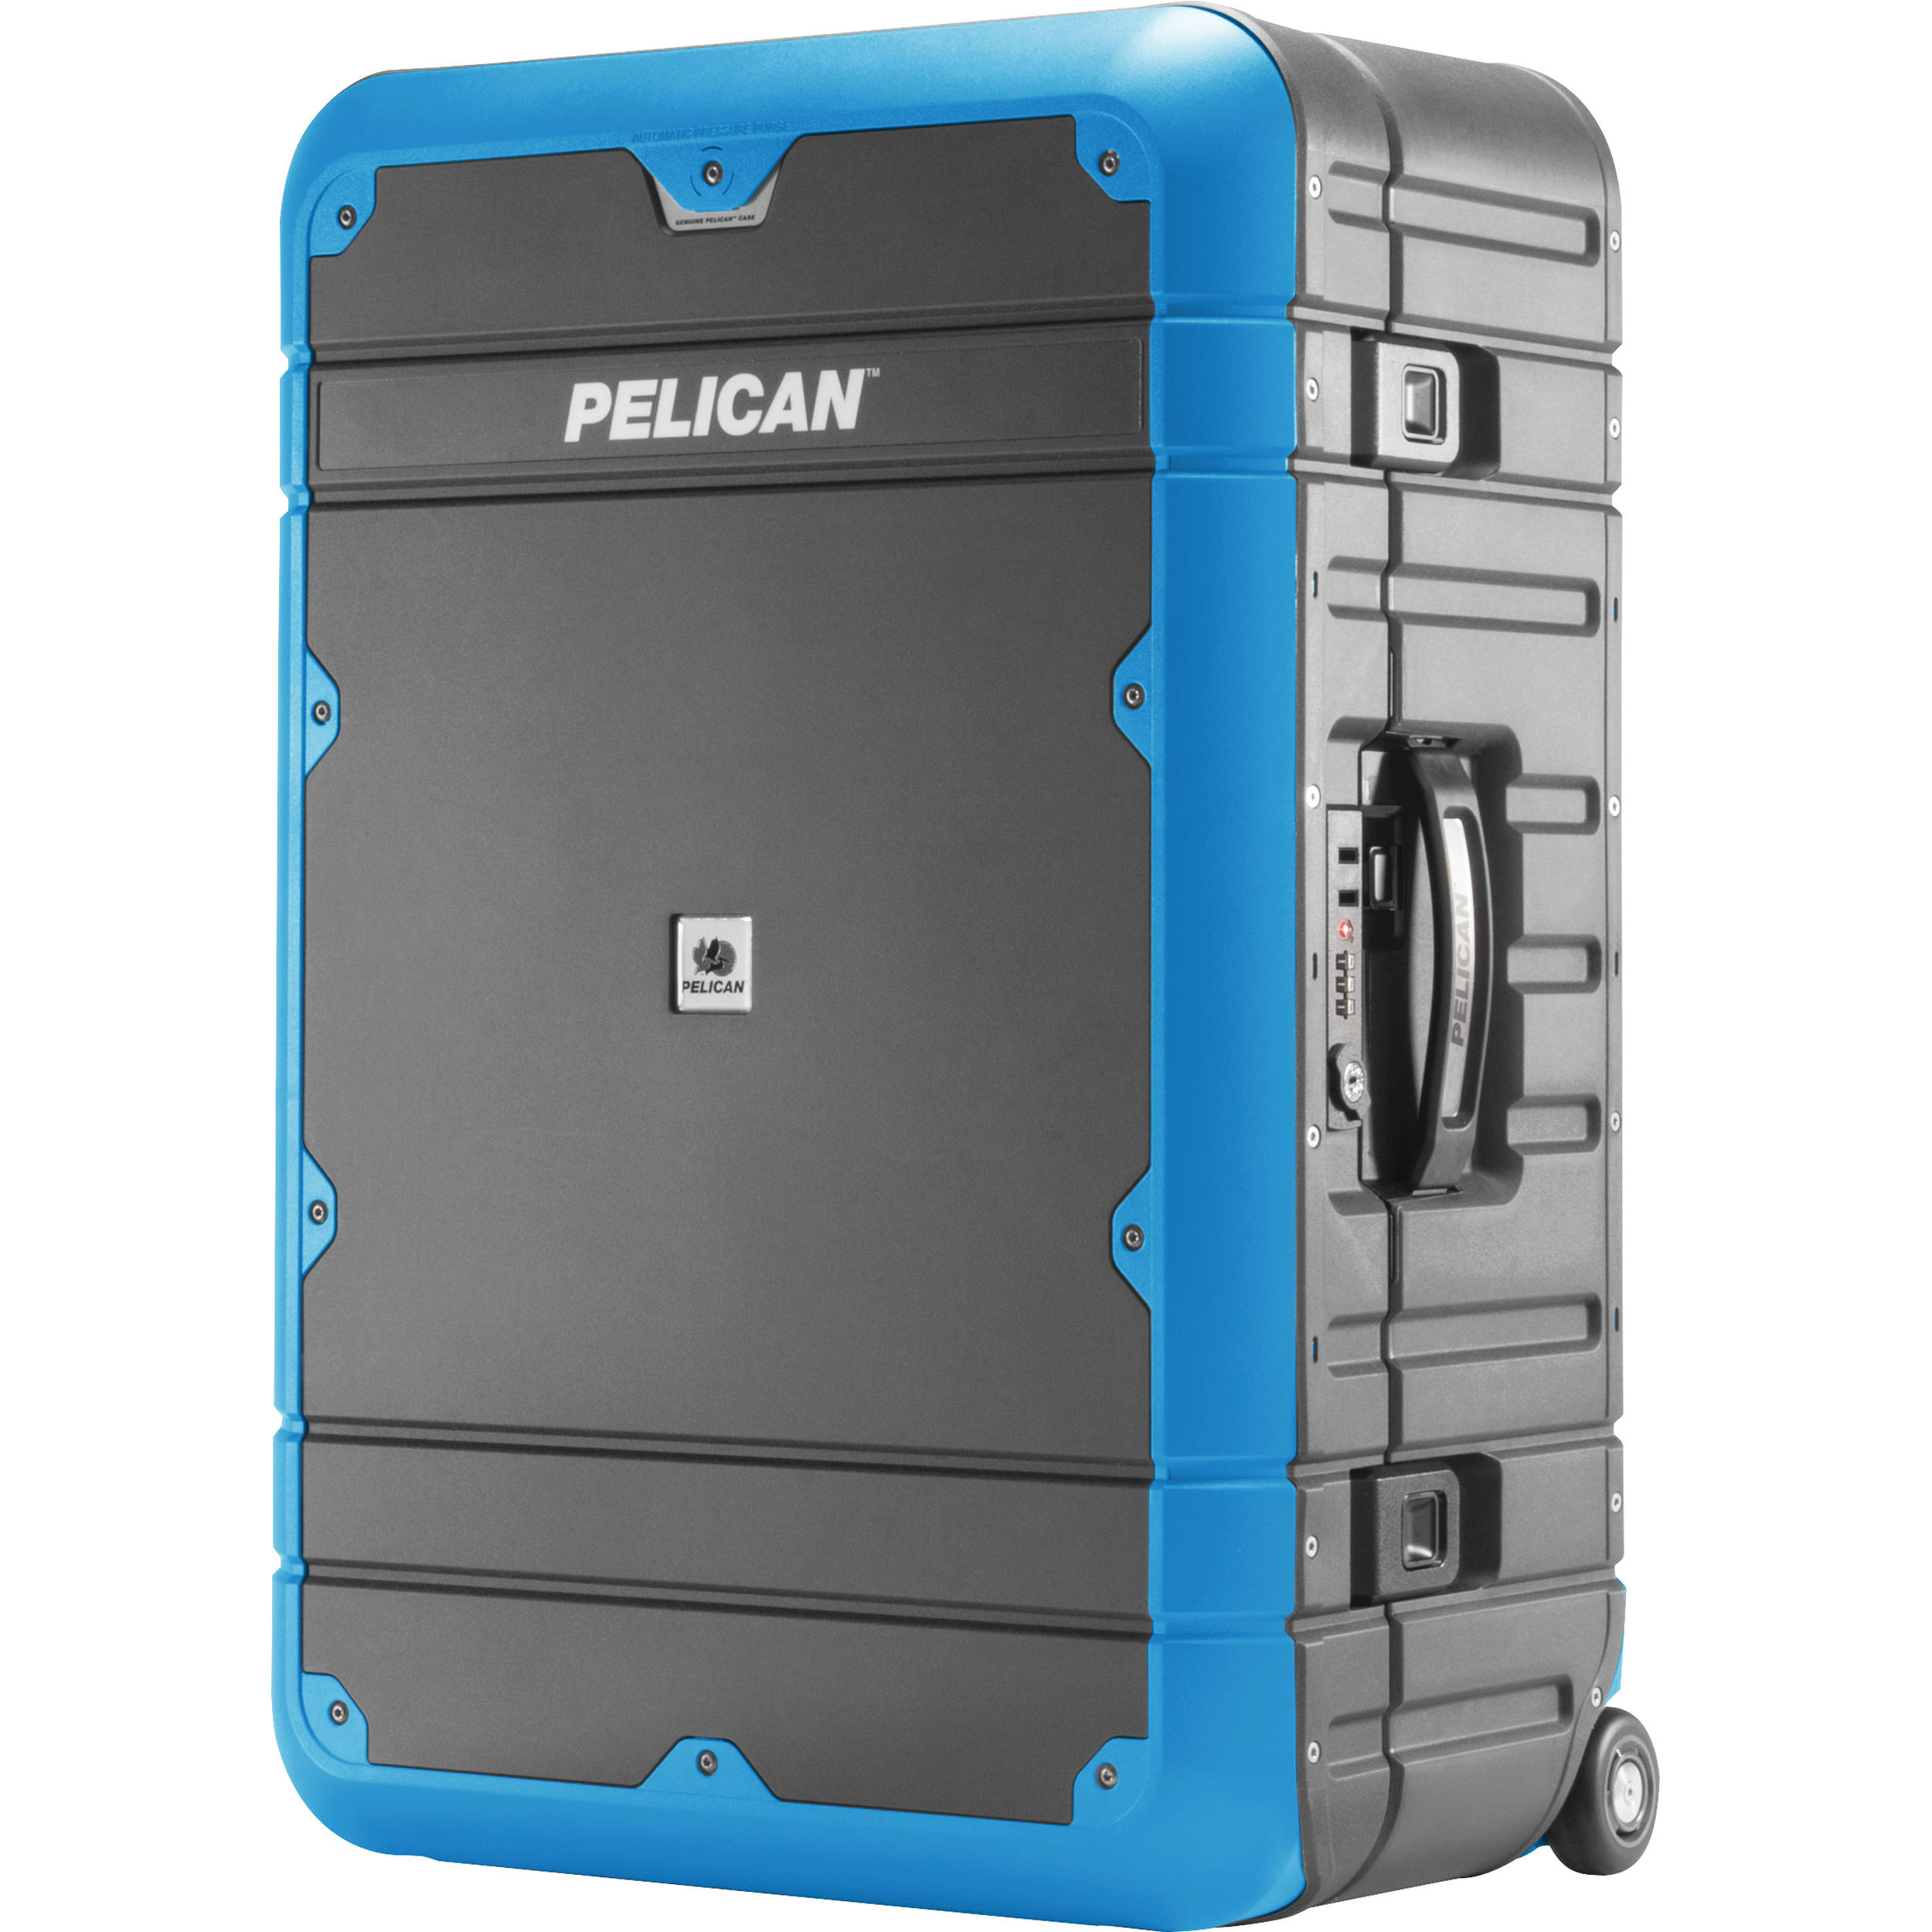 Pelican EL27 Elite Weekender Luggage with Enhanced Travel System (Grey and Blue)